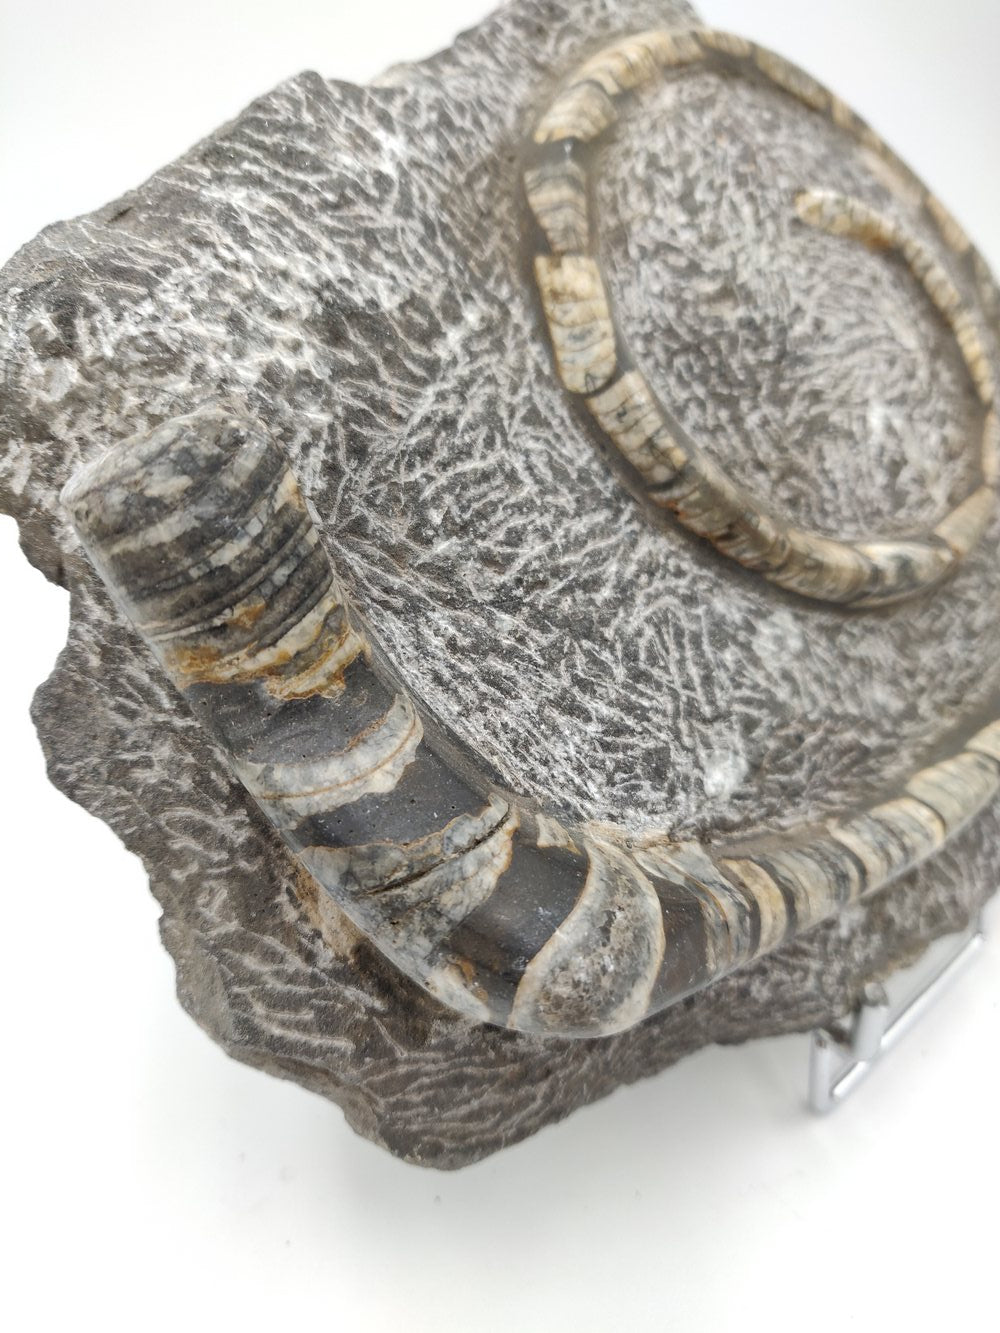 Orthoceras en spirale - Cephalopode fossile